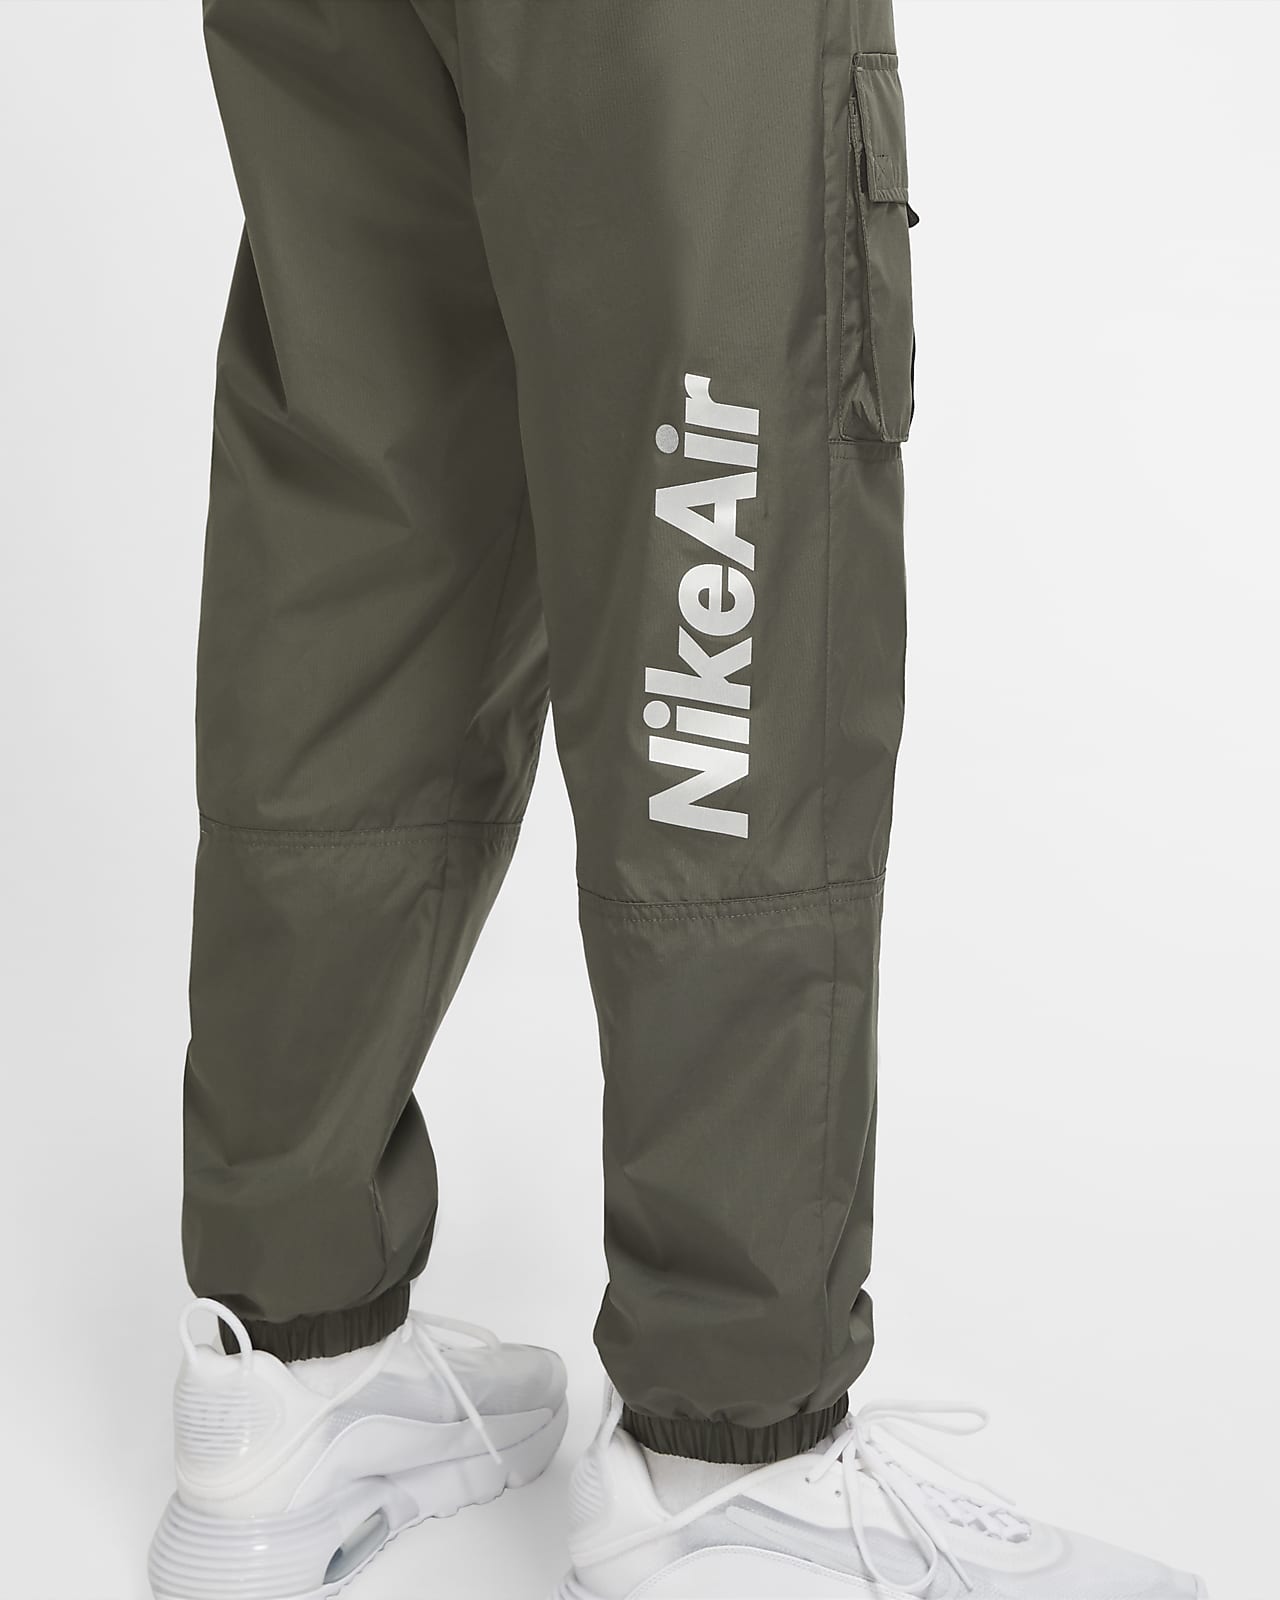 nike max cargo pants grey